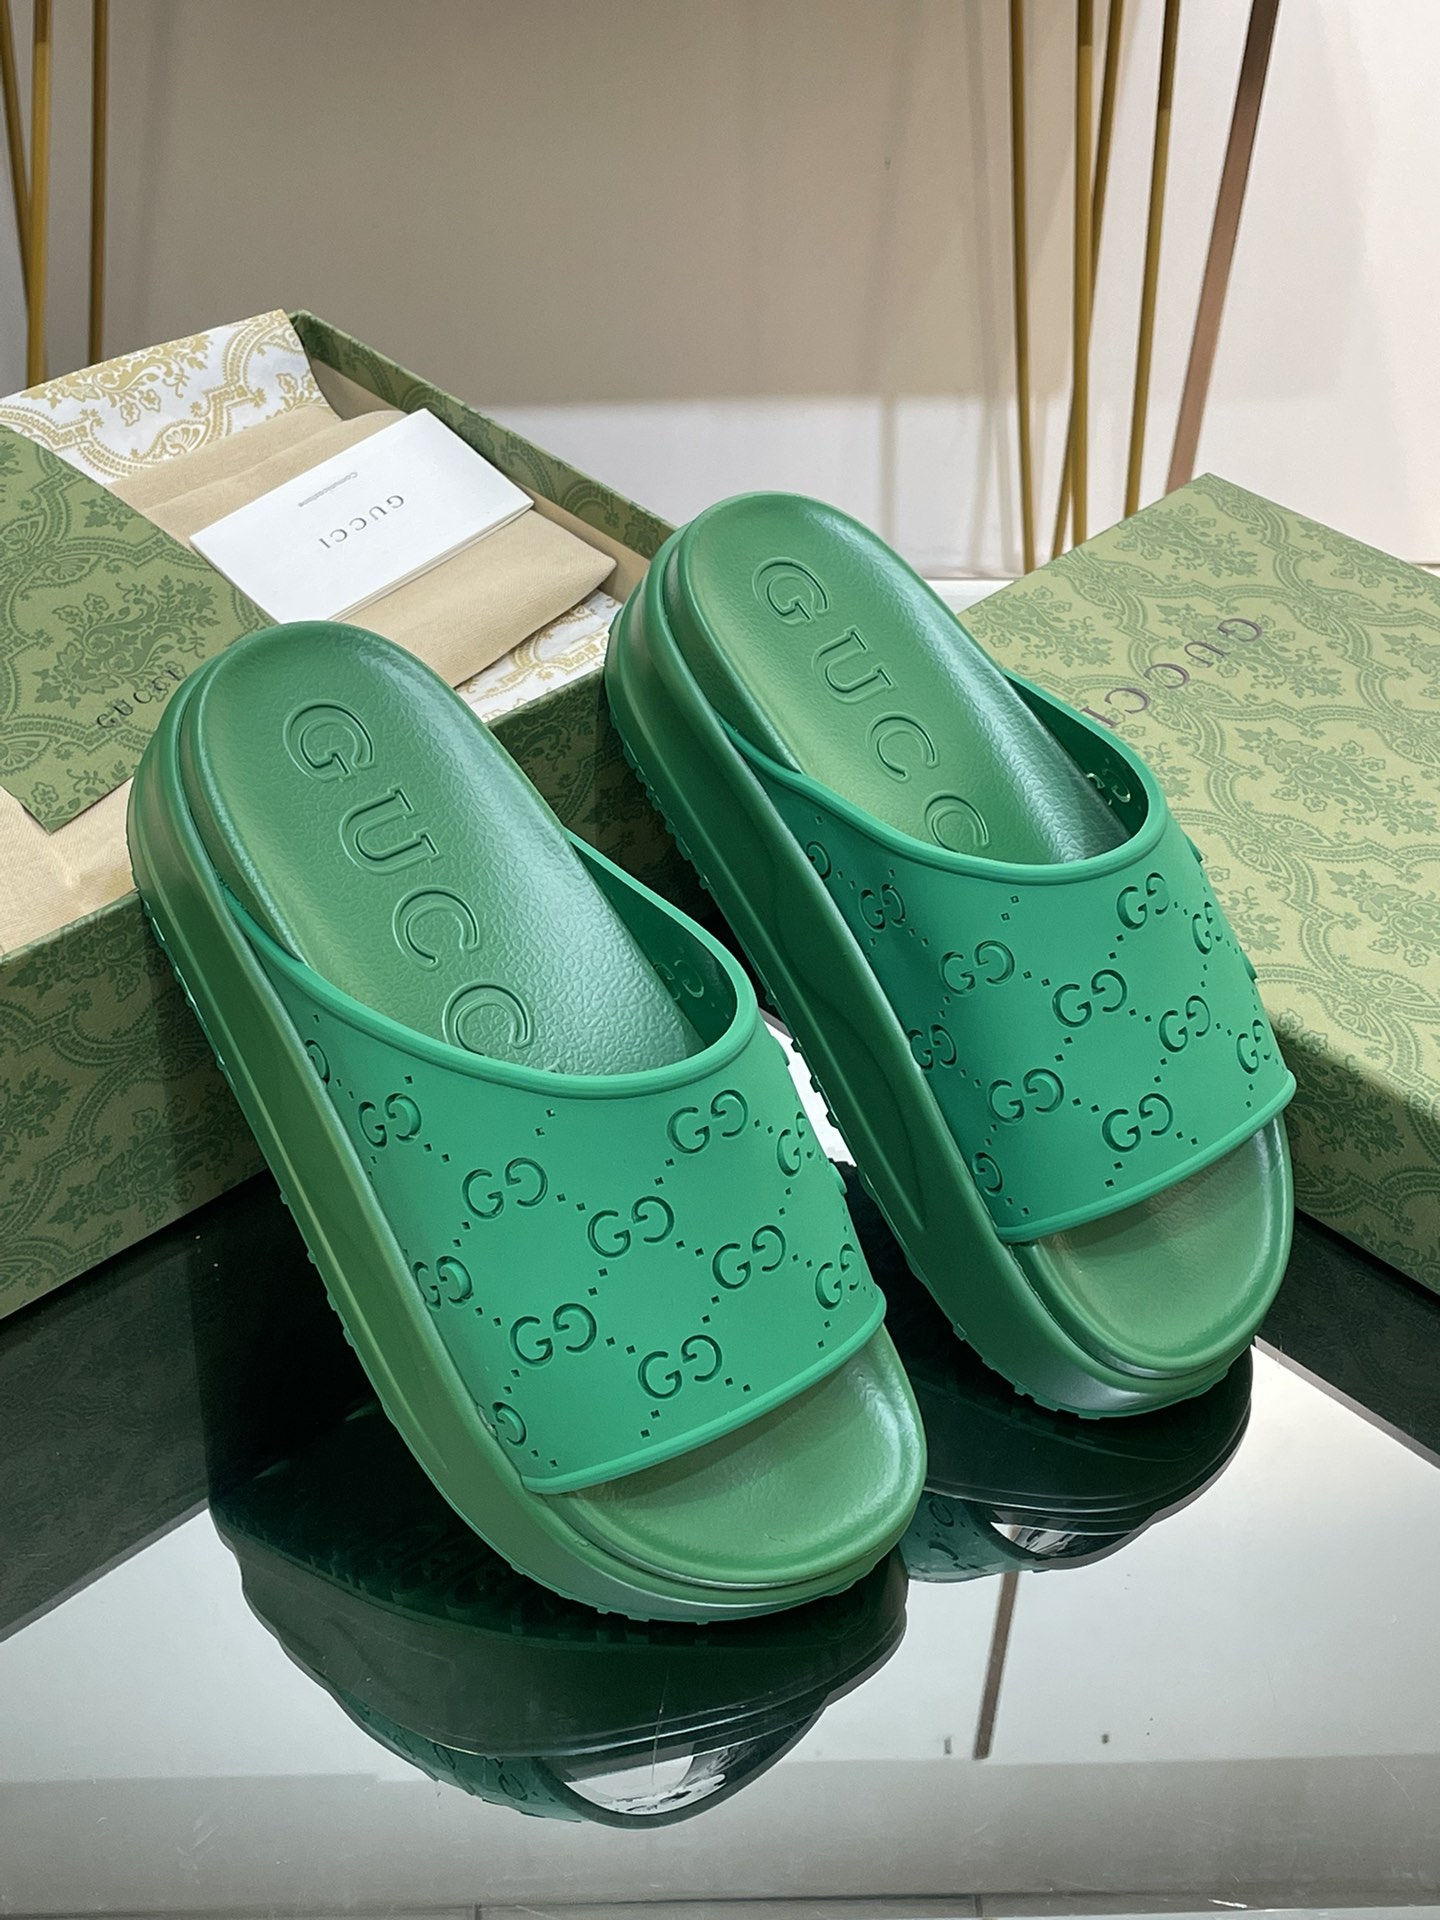 Gucci Best
 Shoes Sandals Slippers Designer Fake
 Green Openwork TPU Summer Collection Beach